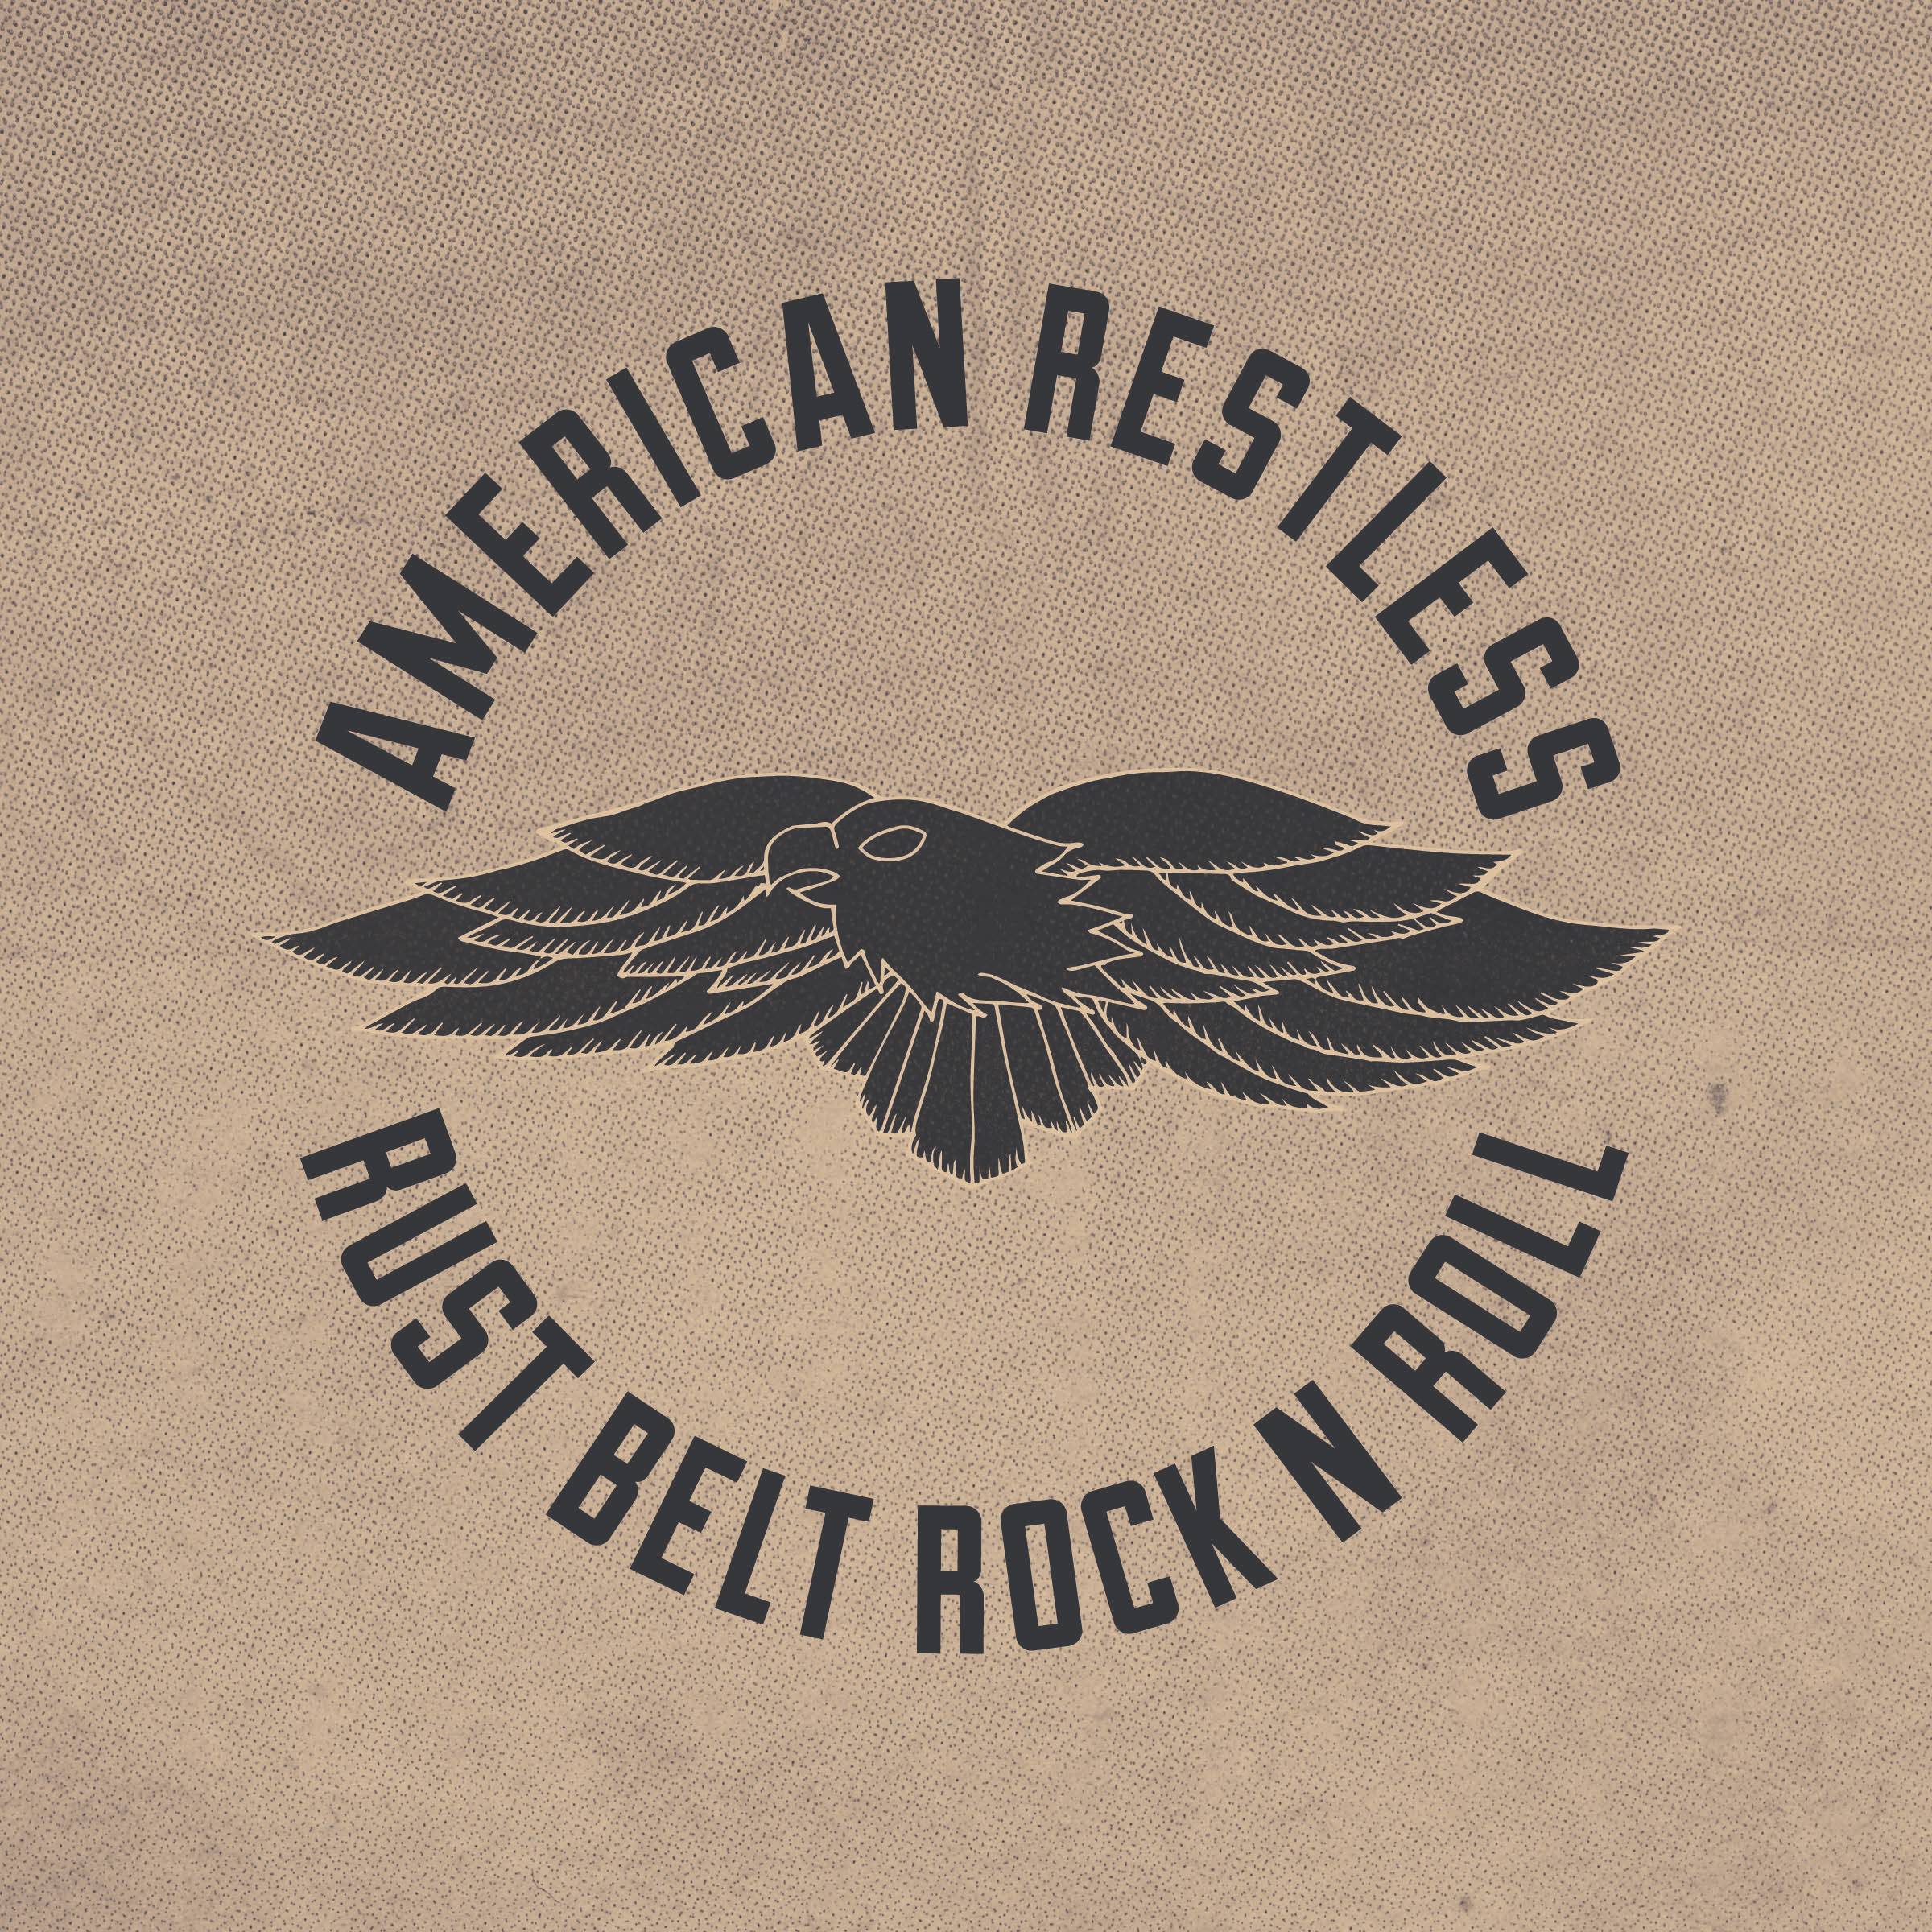 American Restless ‘Rust Belt Rock N Roll’ album artwork